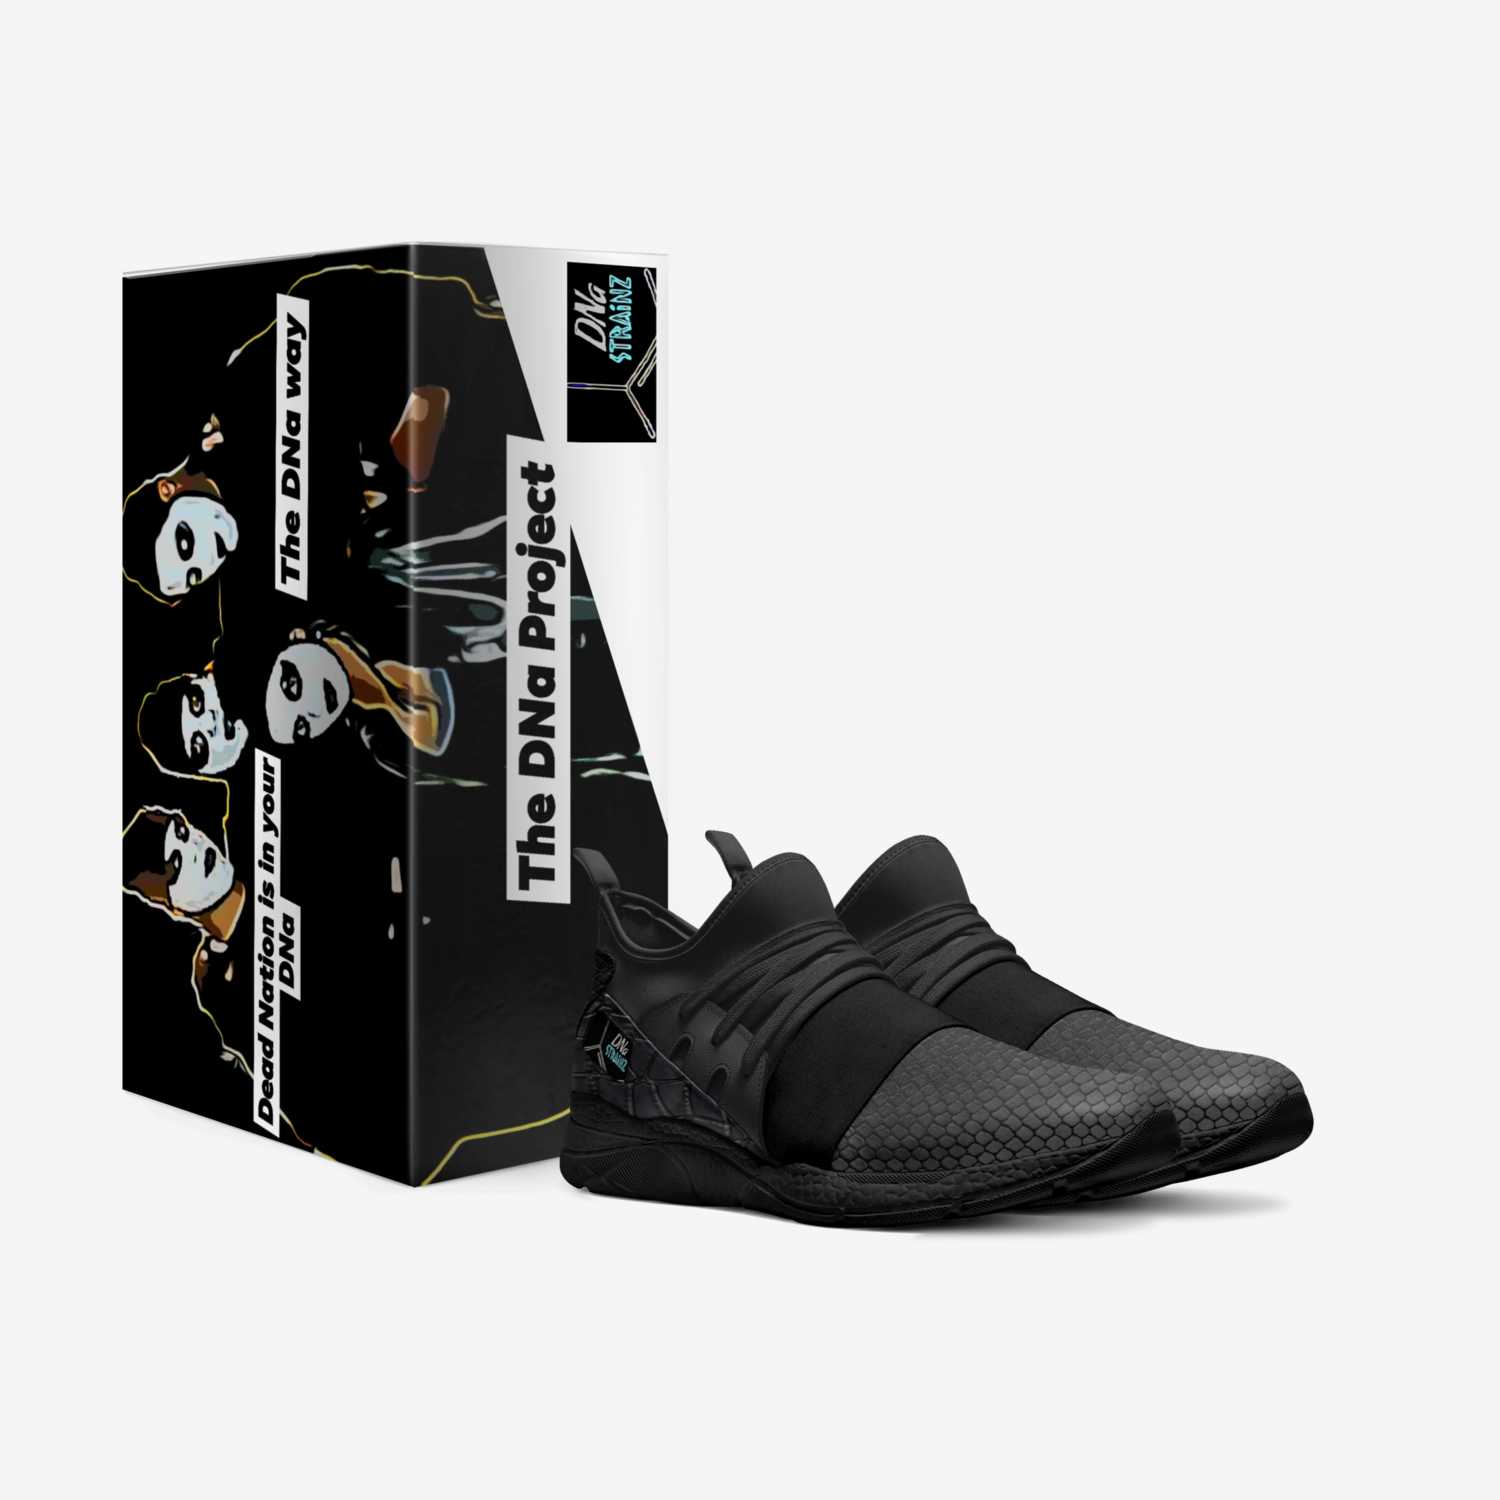 DNa OG Karronicles custom made in Italy shoes by Karron Moffett | Box view